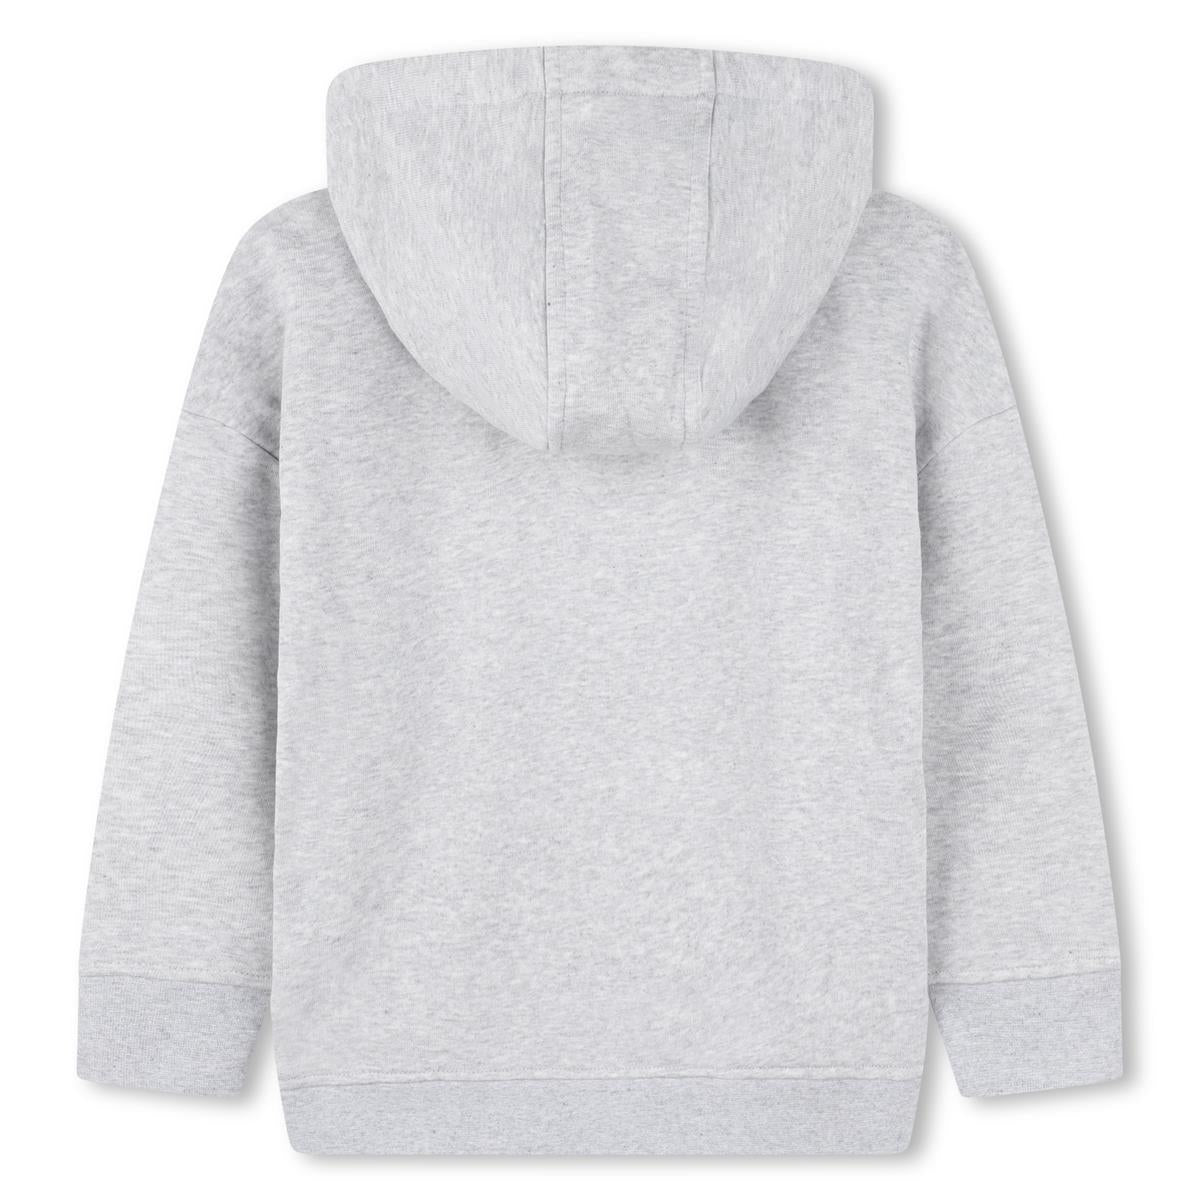 Boys Light Grey Hooded Sweatshirt